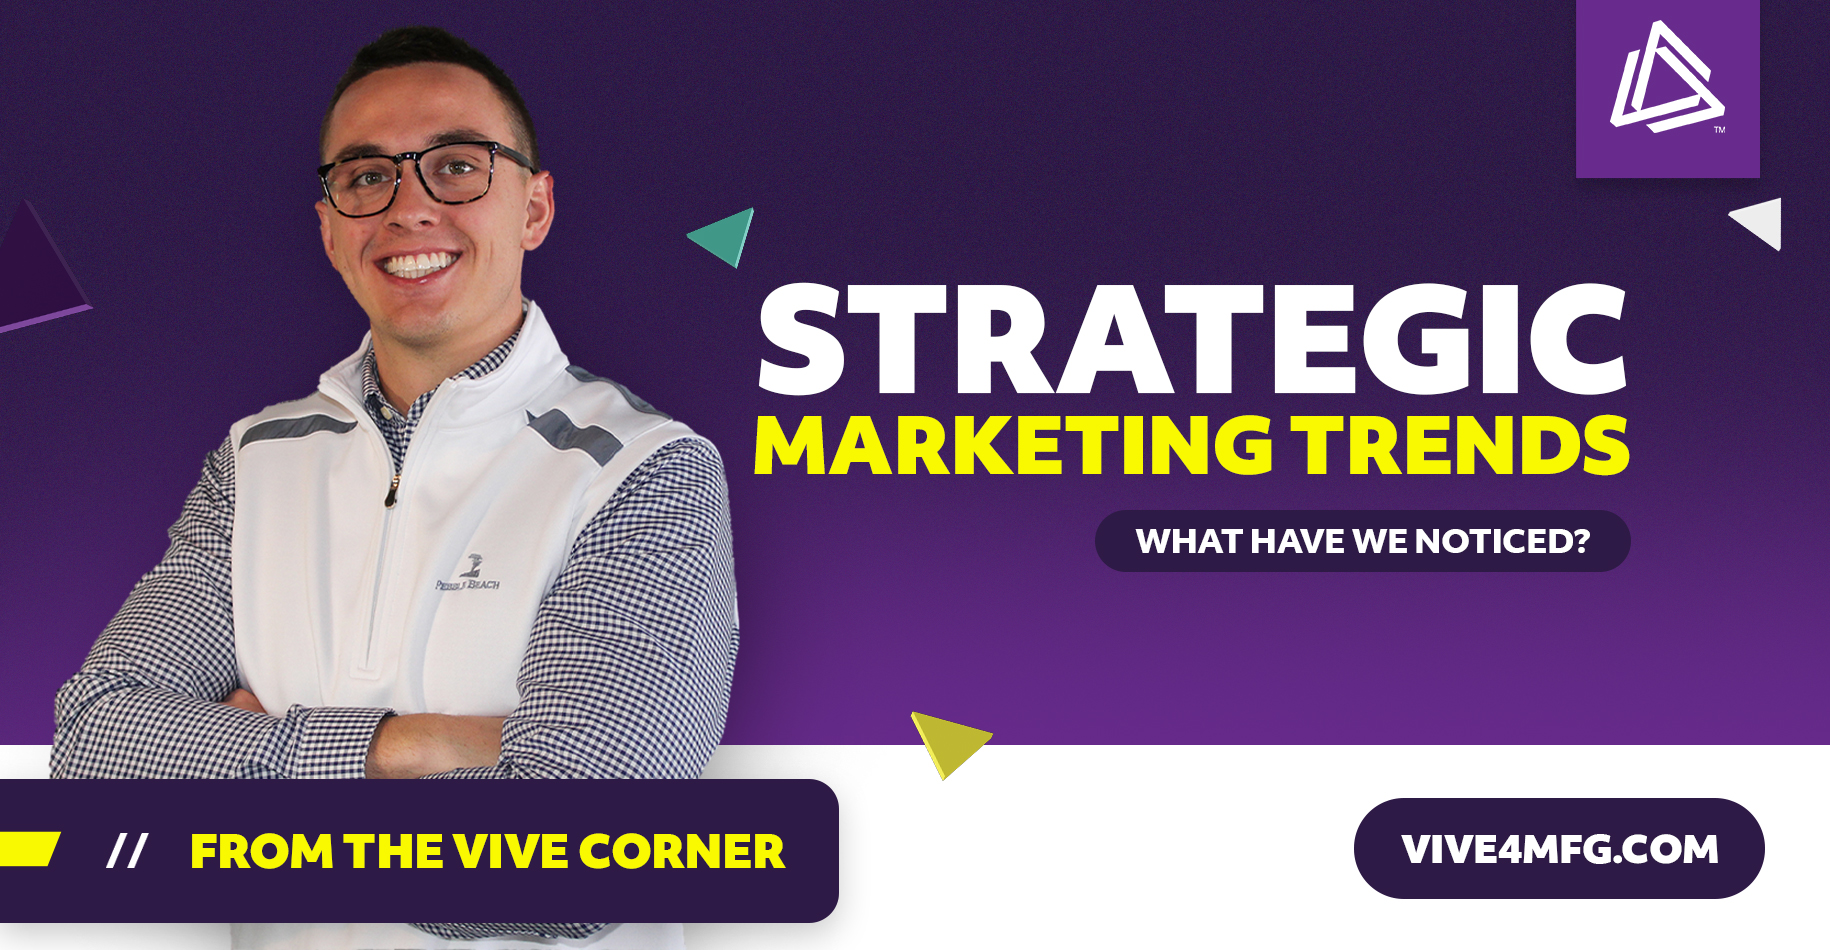 Vive Marketing's Director of Digital Strategies, Jared Falkner